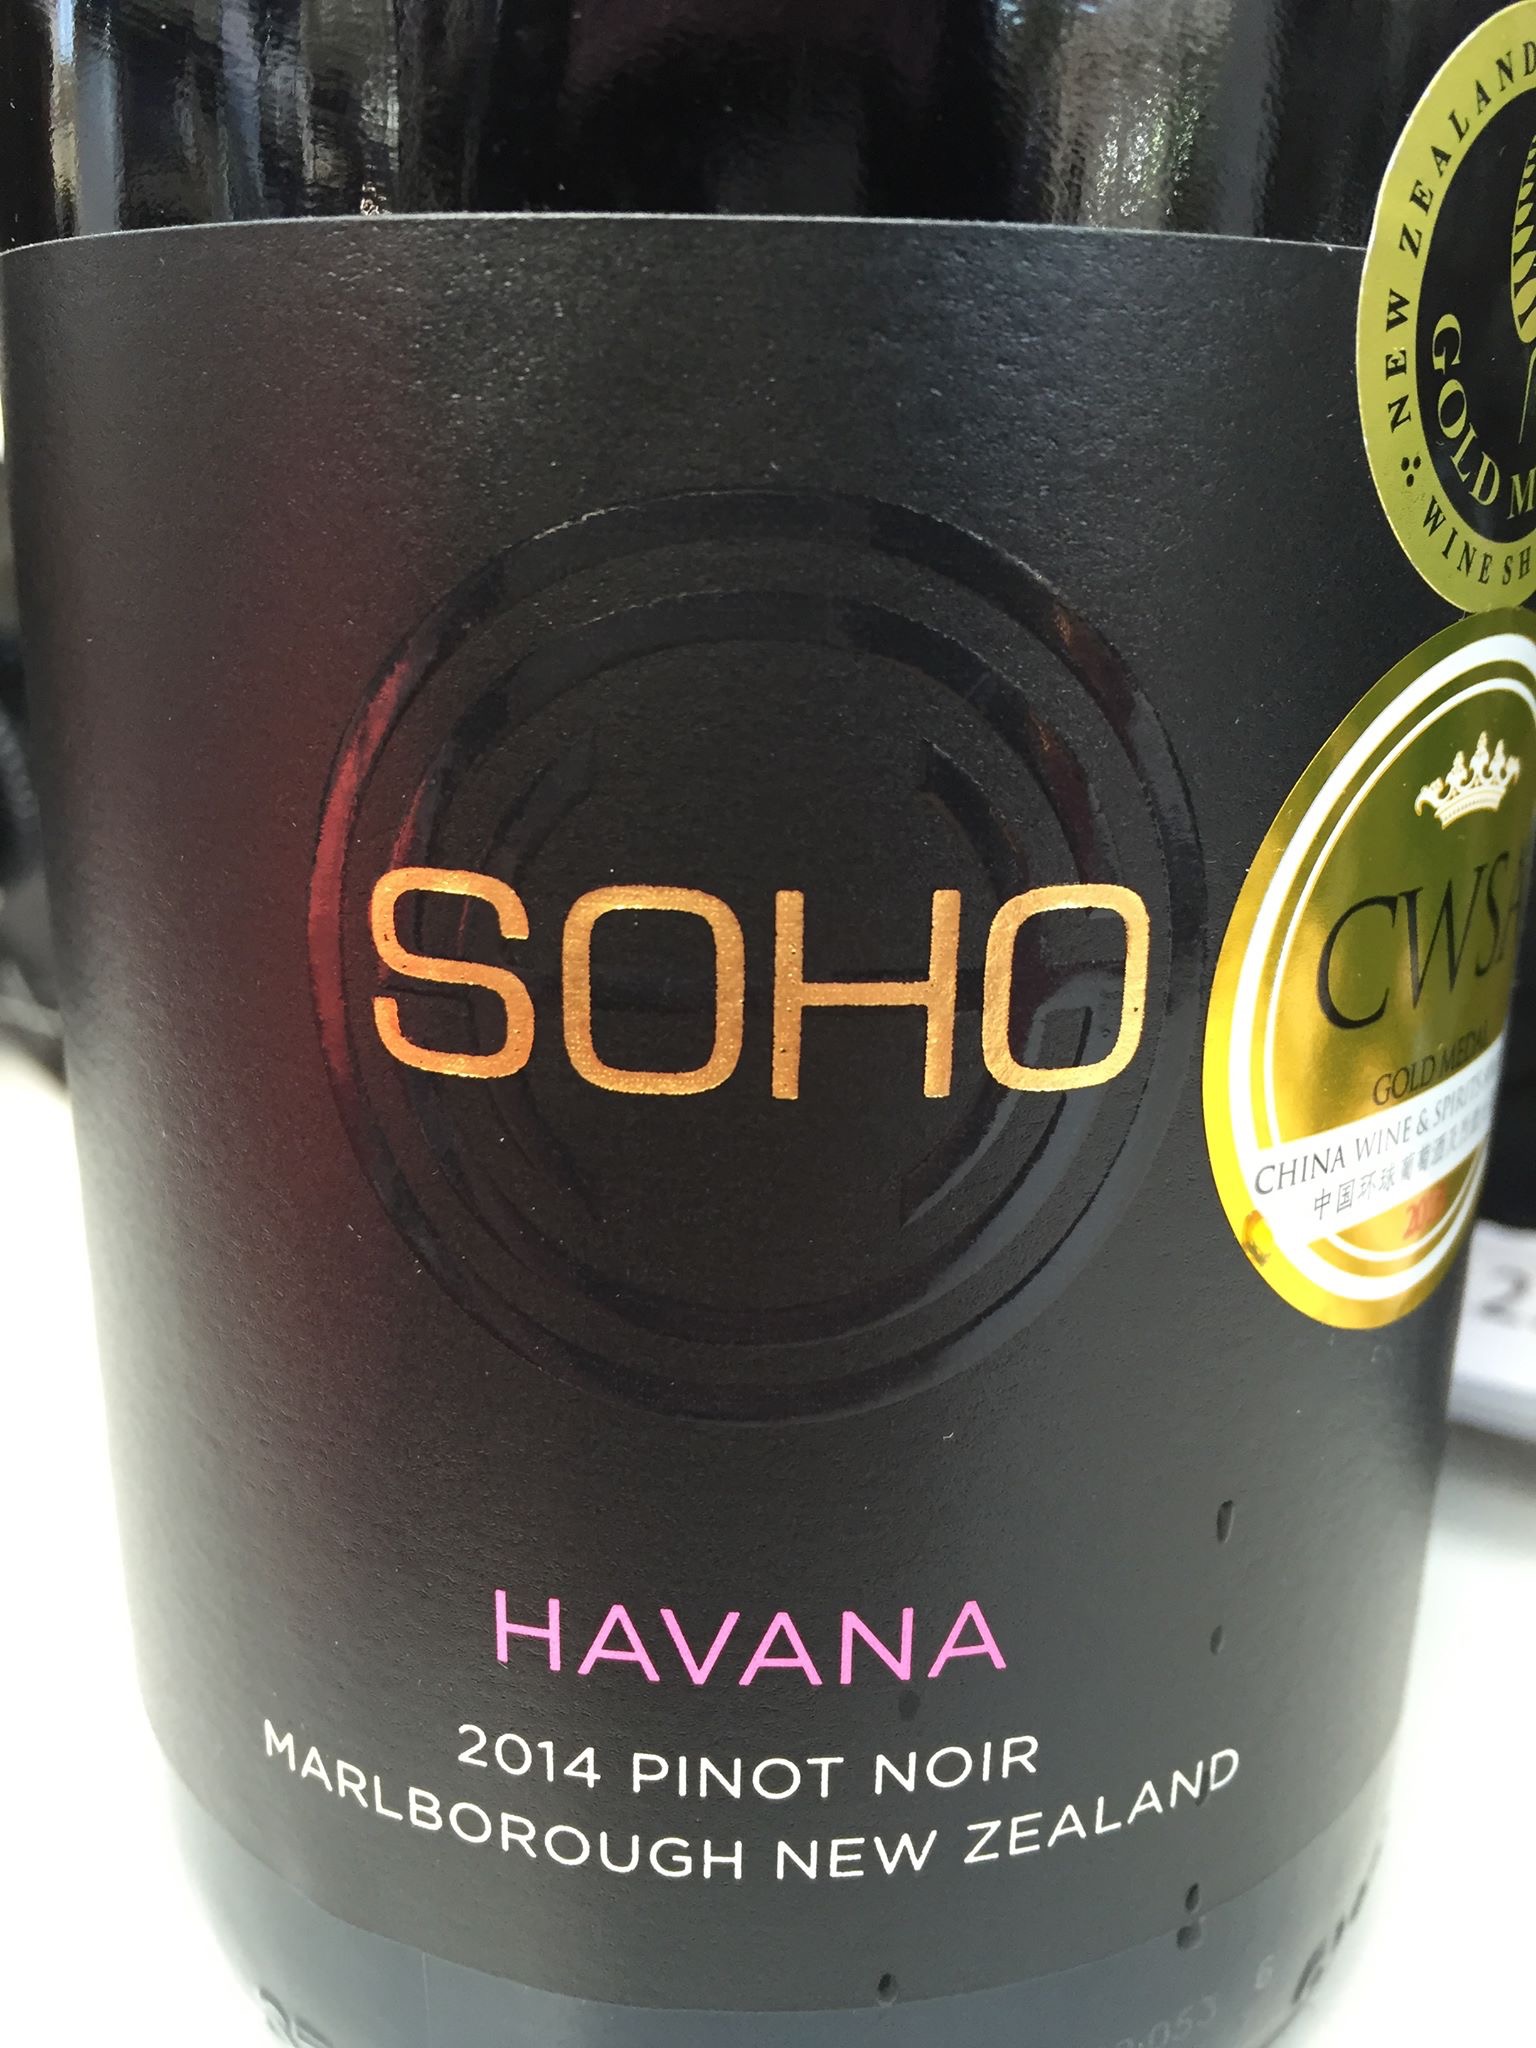 Soho – Havana – Pinot Noir 2014 – Marlborough